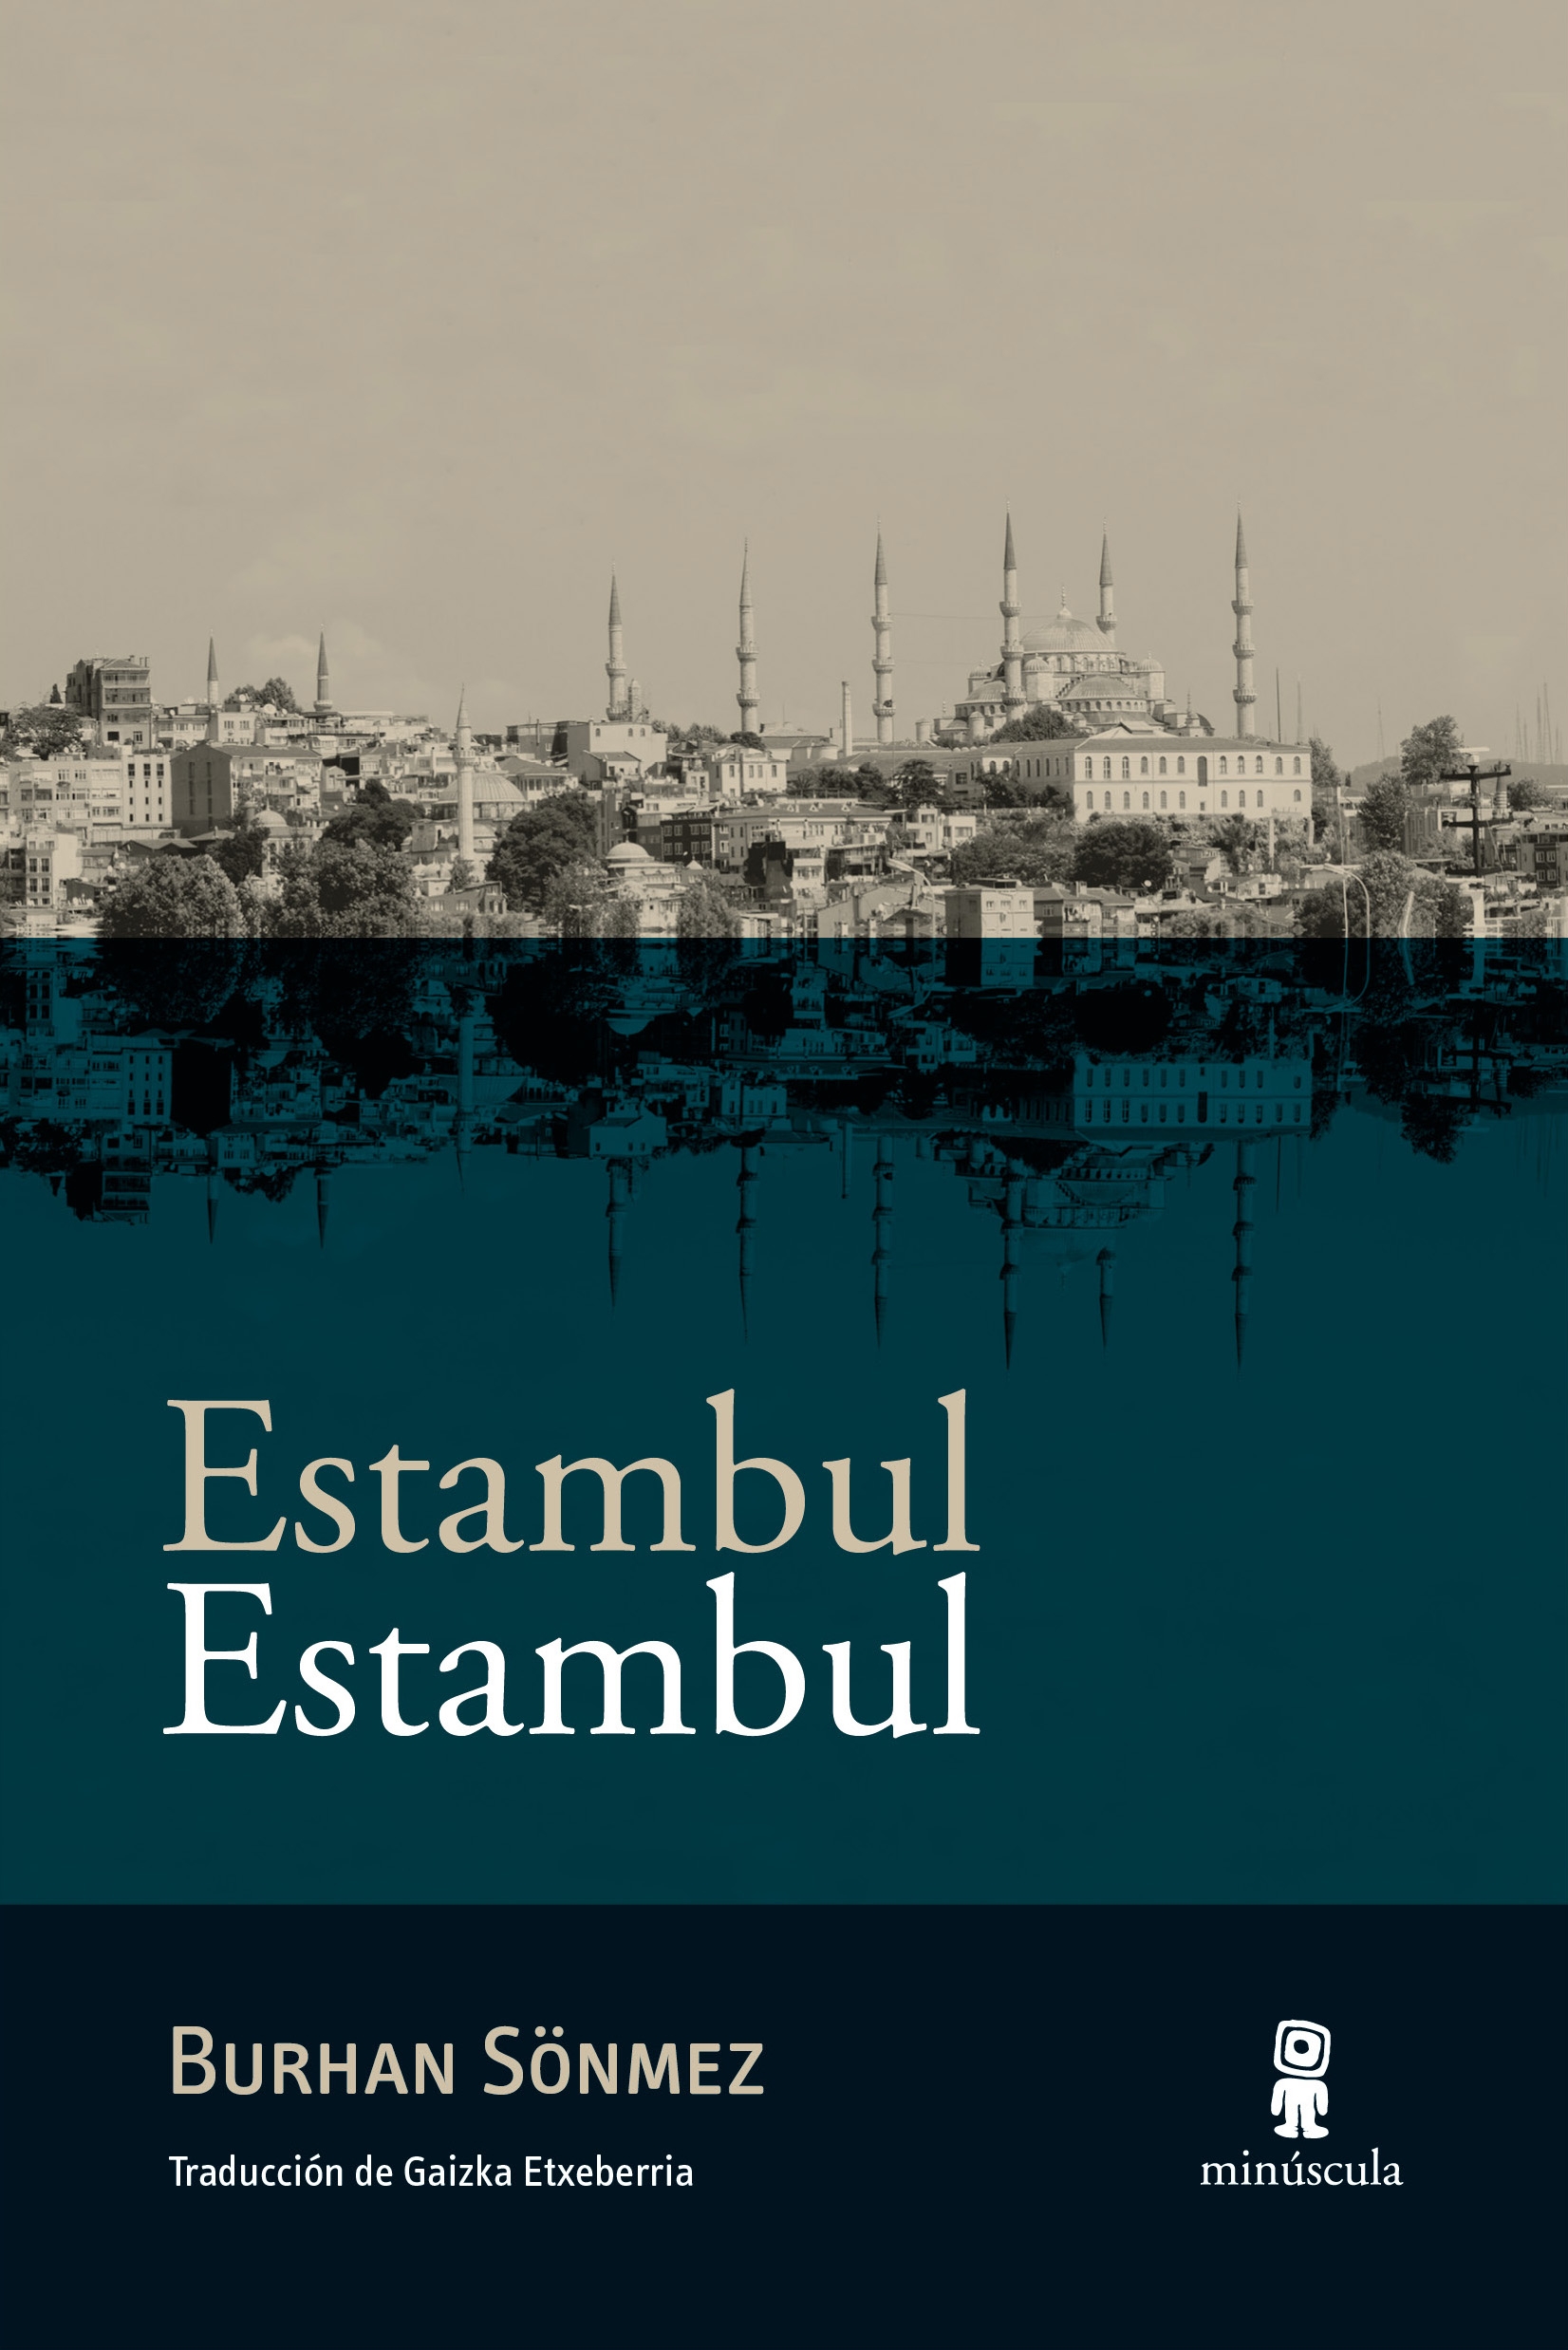 Estambul Estambul